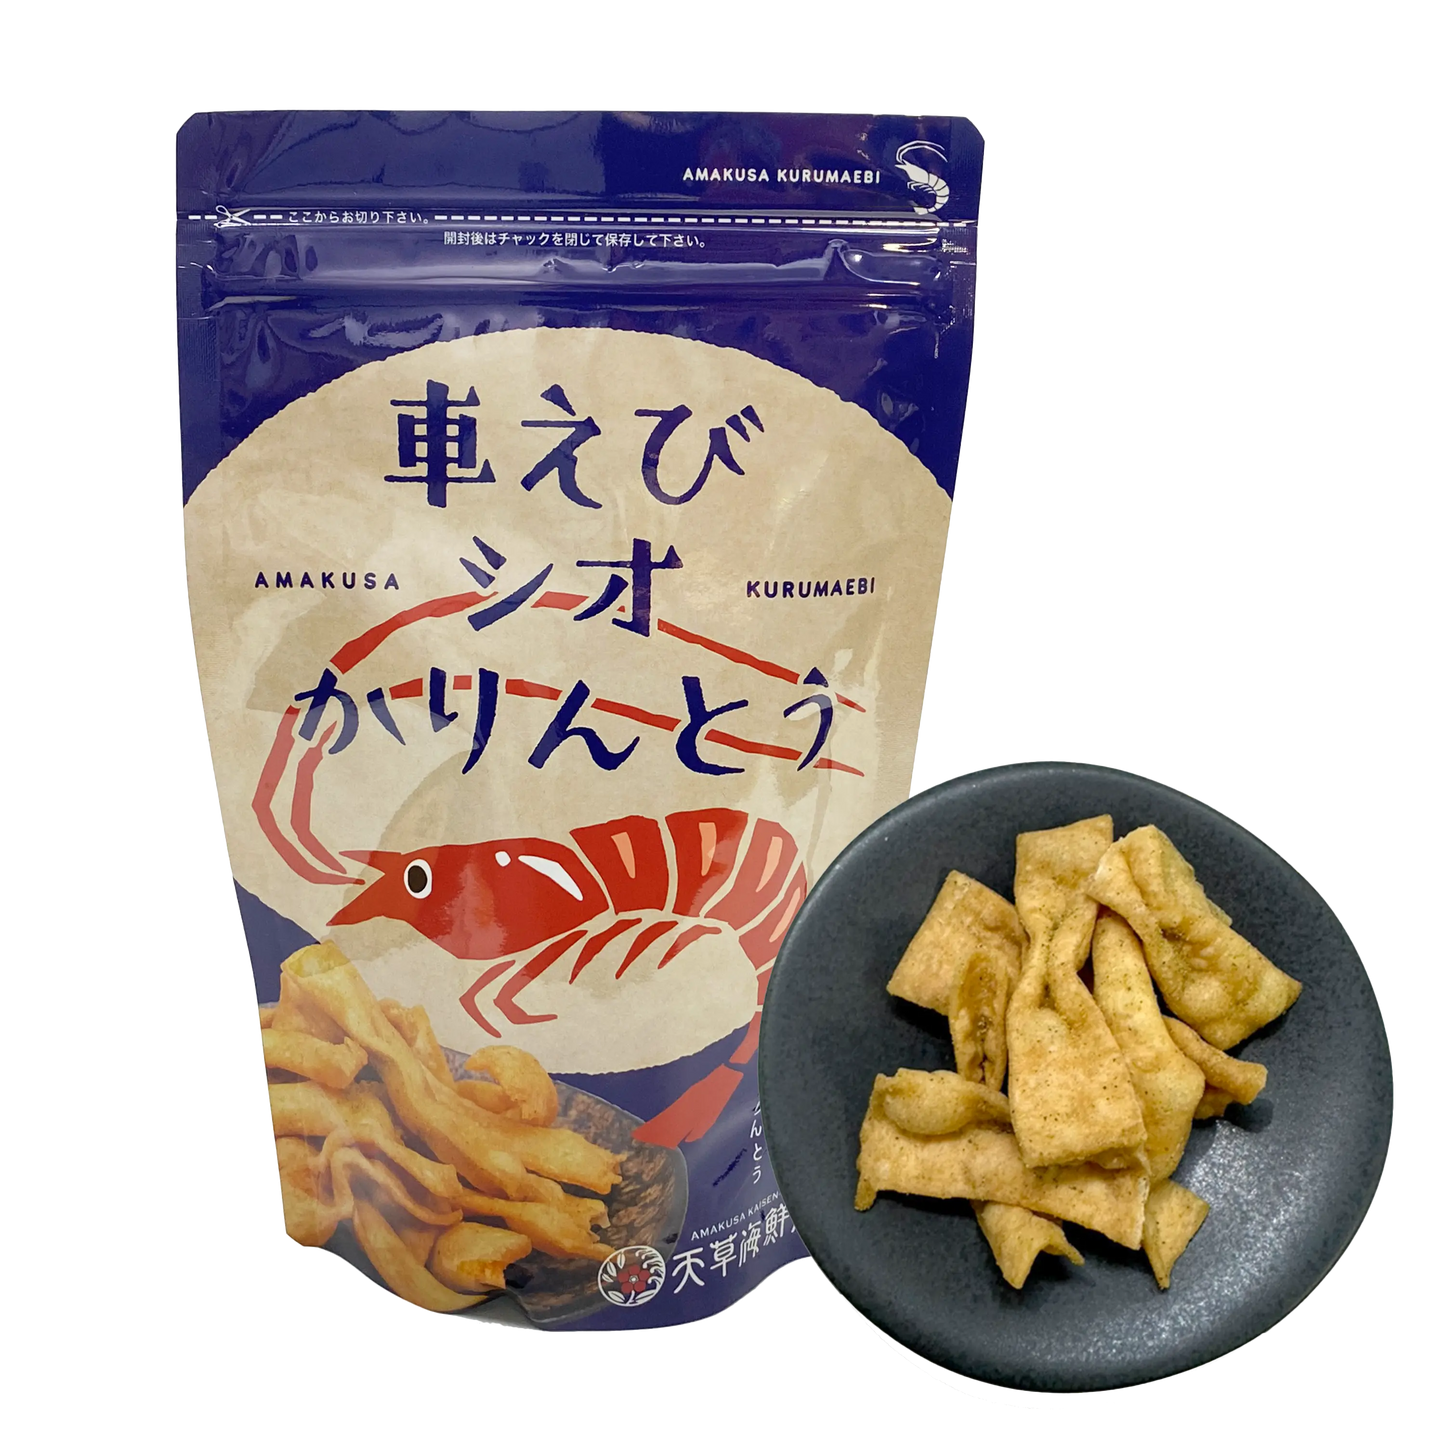 Amakusa Kuruma Shrimp Karinto (60g x 3 bags)